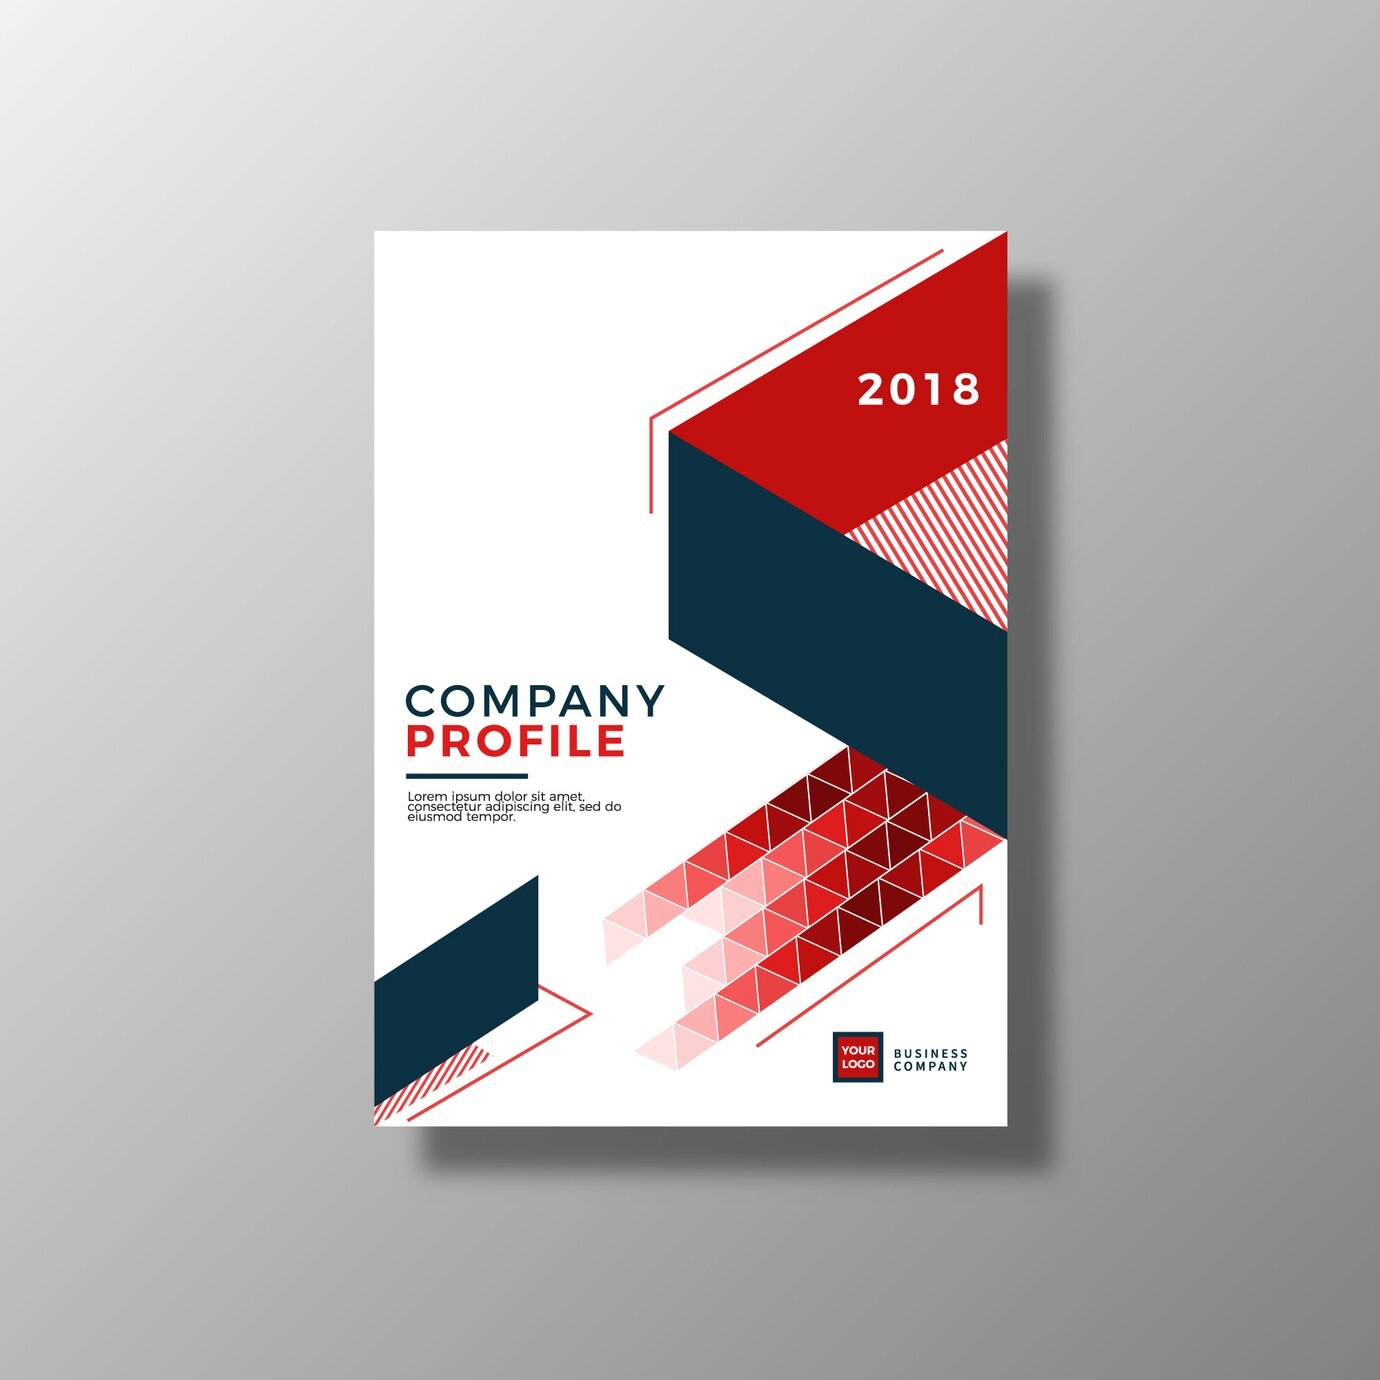 Company Profile-12 Page Cover Image